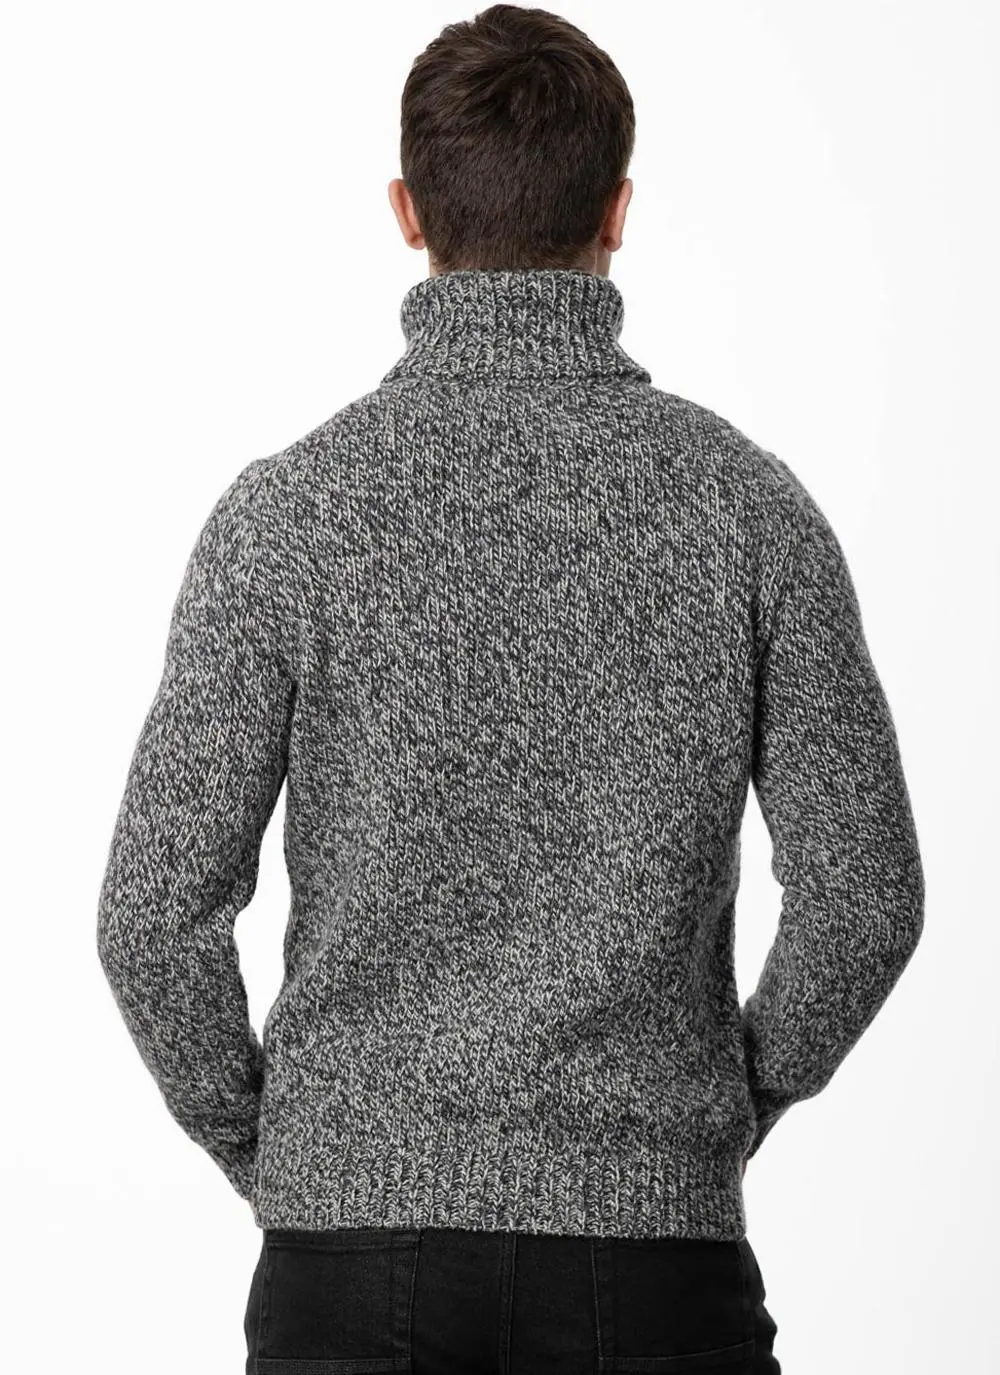 Fisherman Wool Cashmere Polo Neck Sweater in Salt/Pepper | Blarney